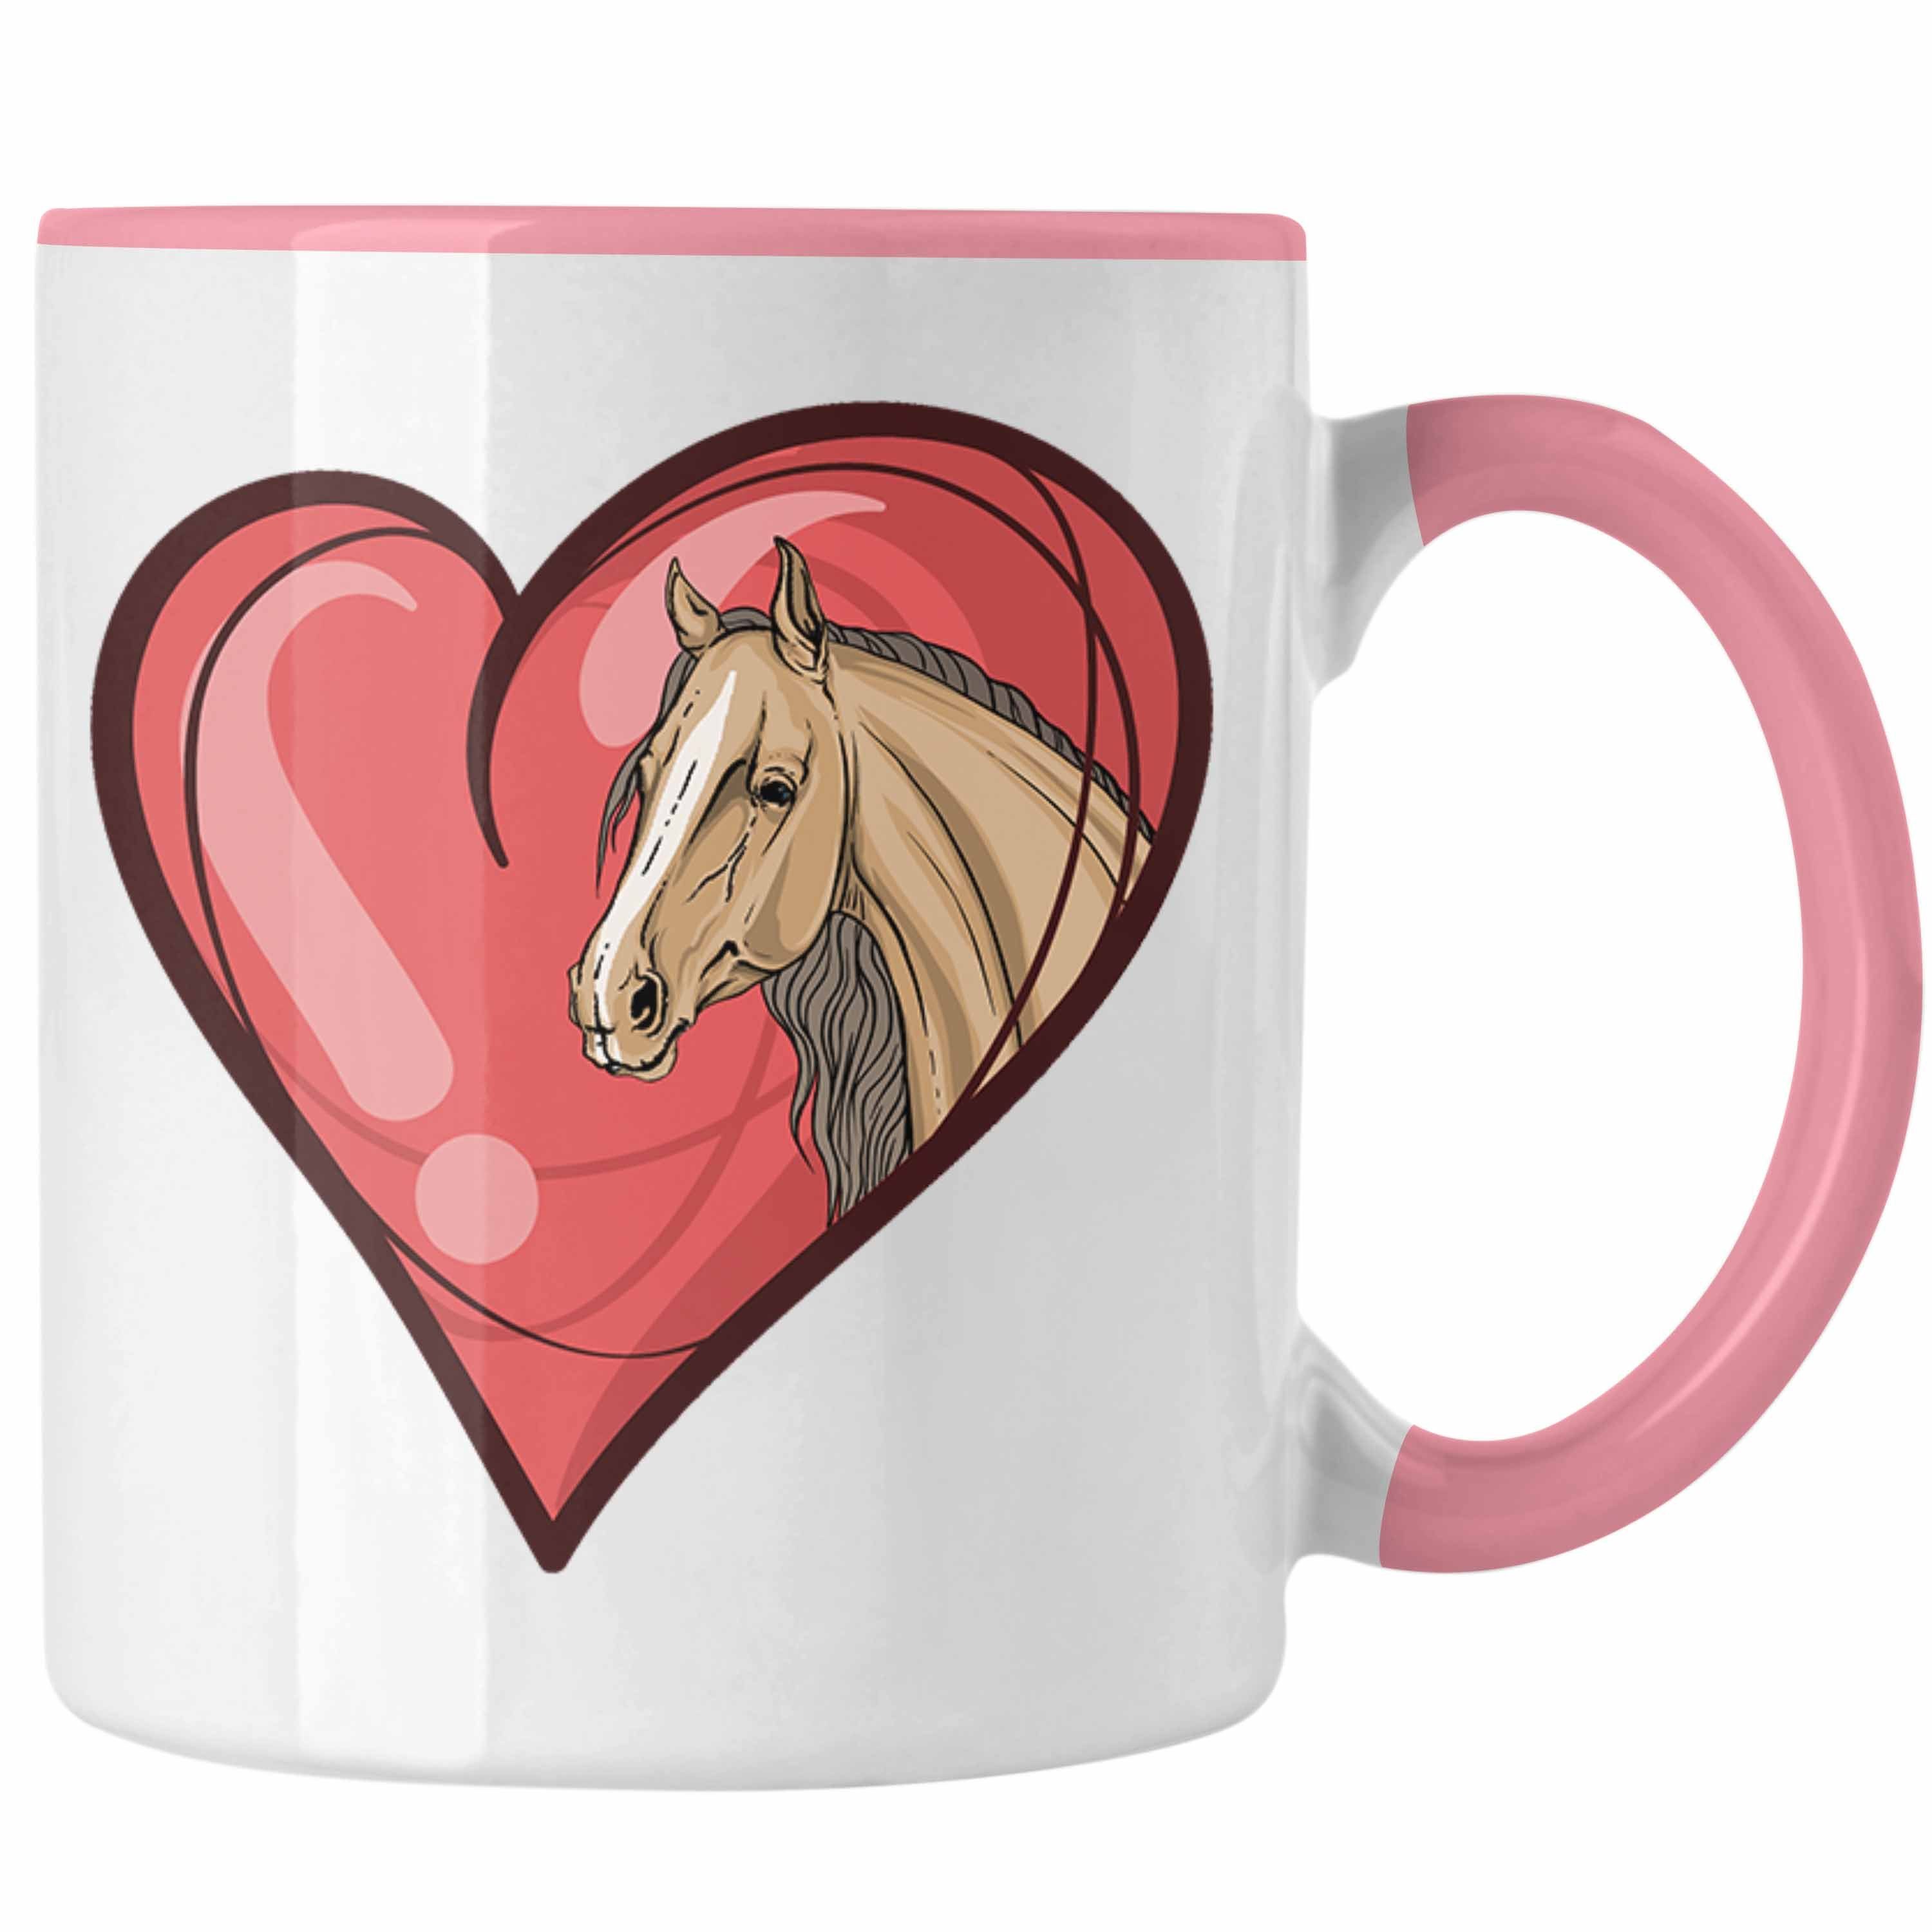 Geschenk Trendation Tasse Grafik Pferde Lustig Tasse Rosa